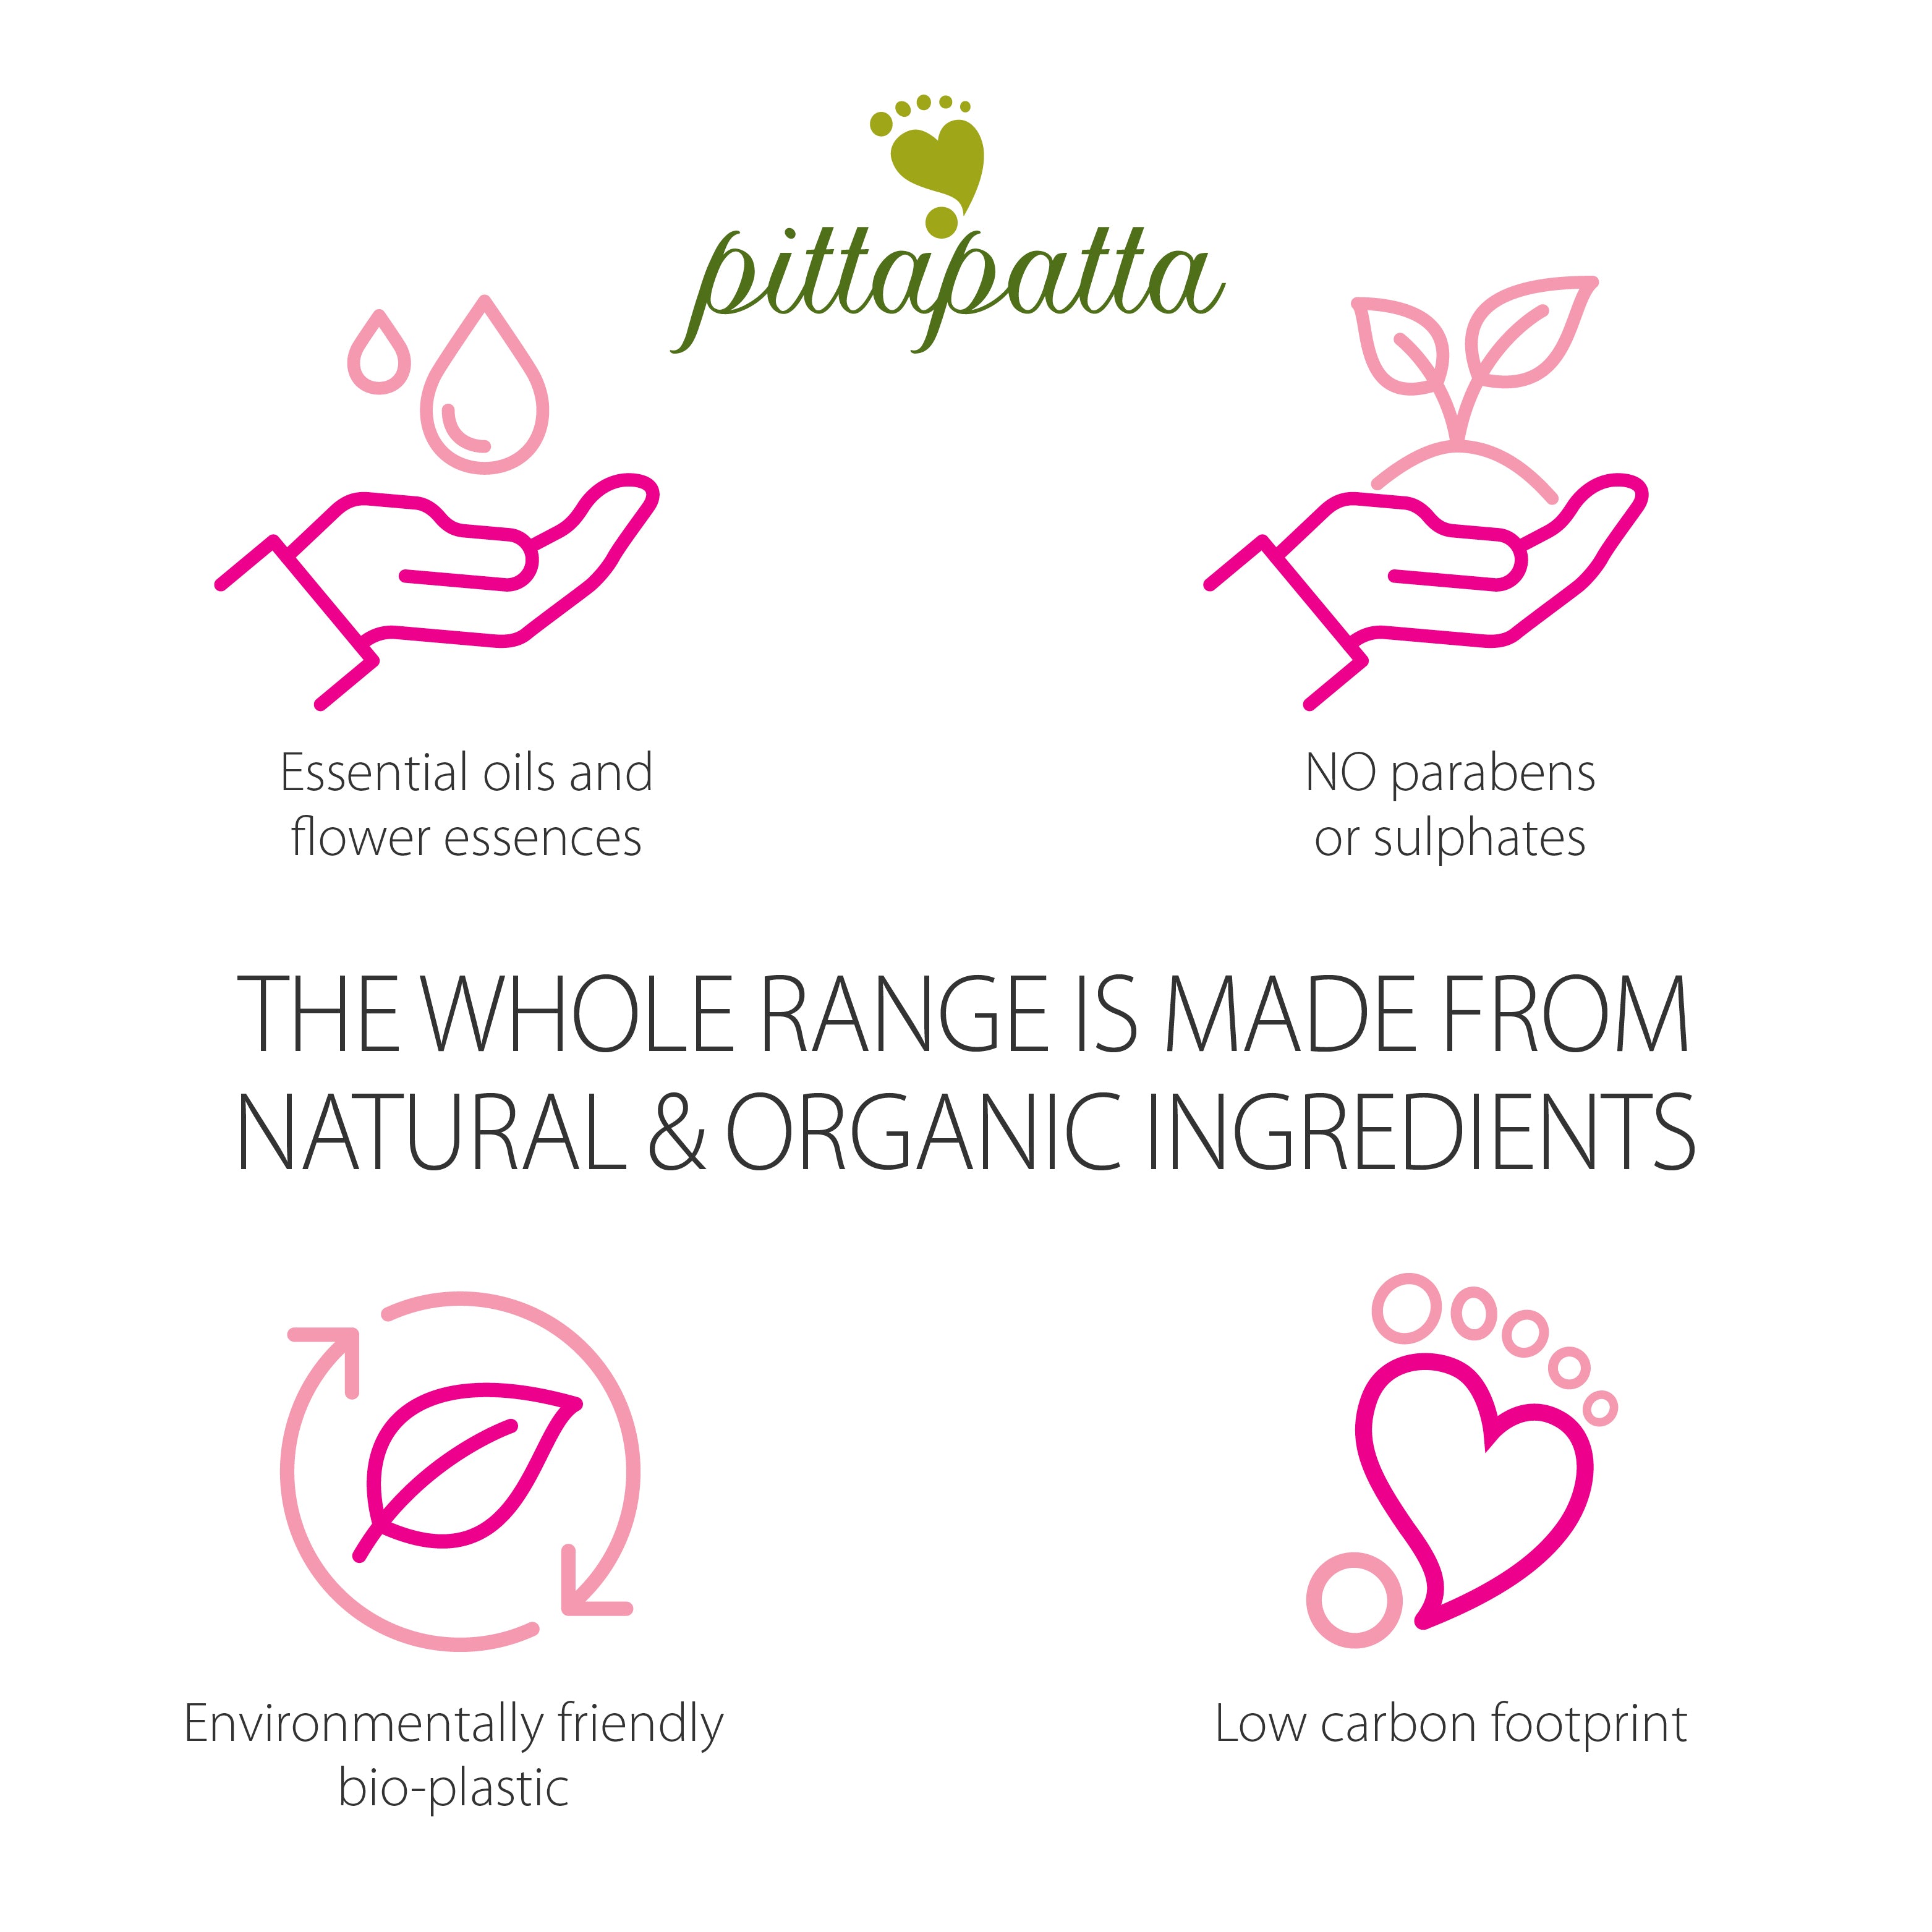 Pittapatta Organic Barrier Cream